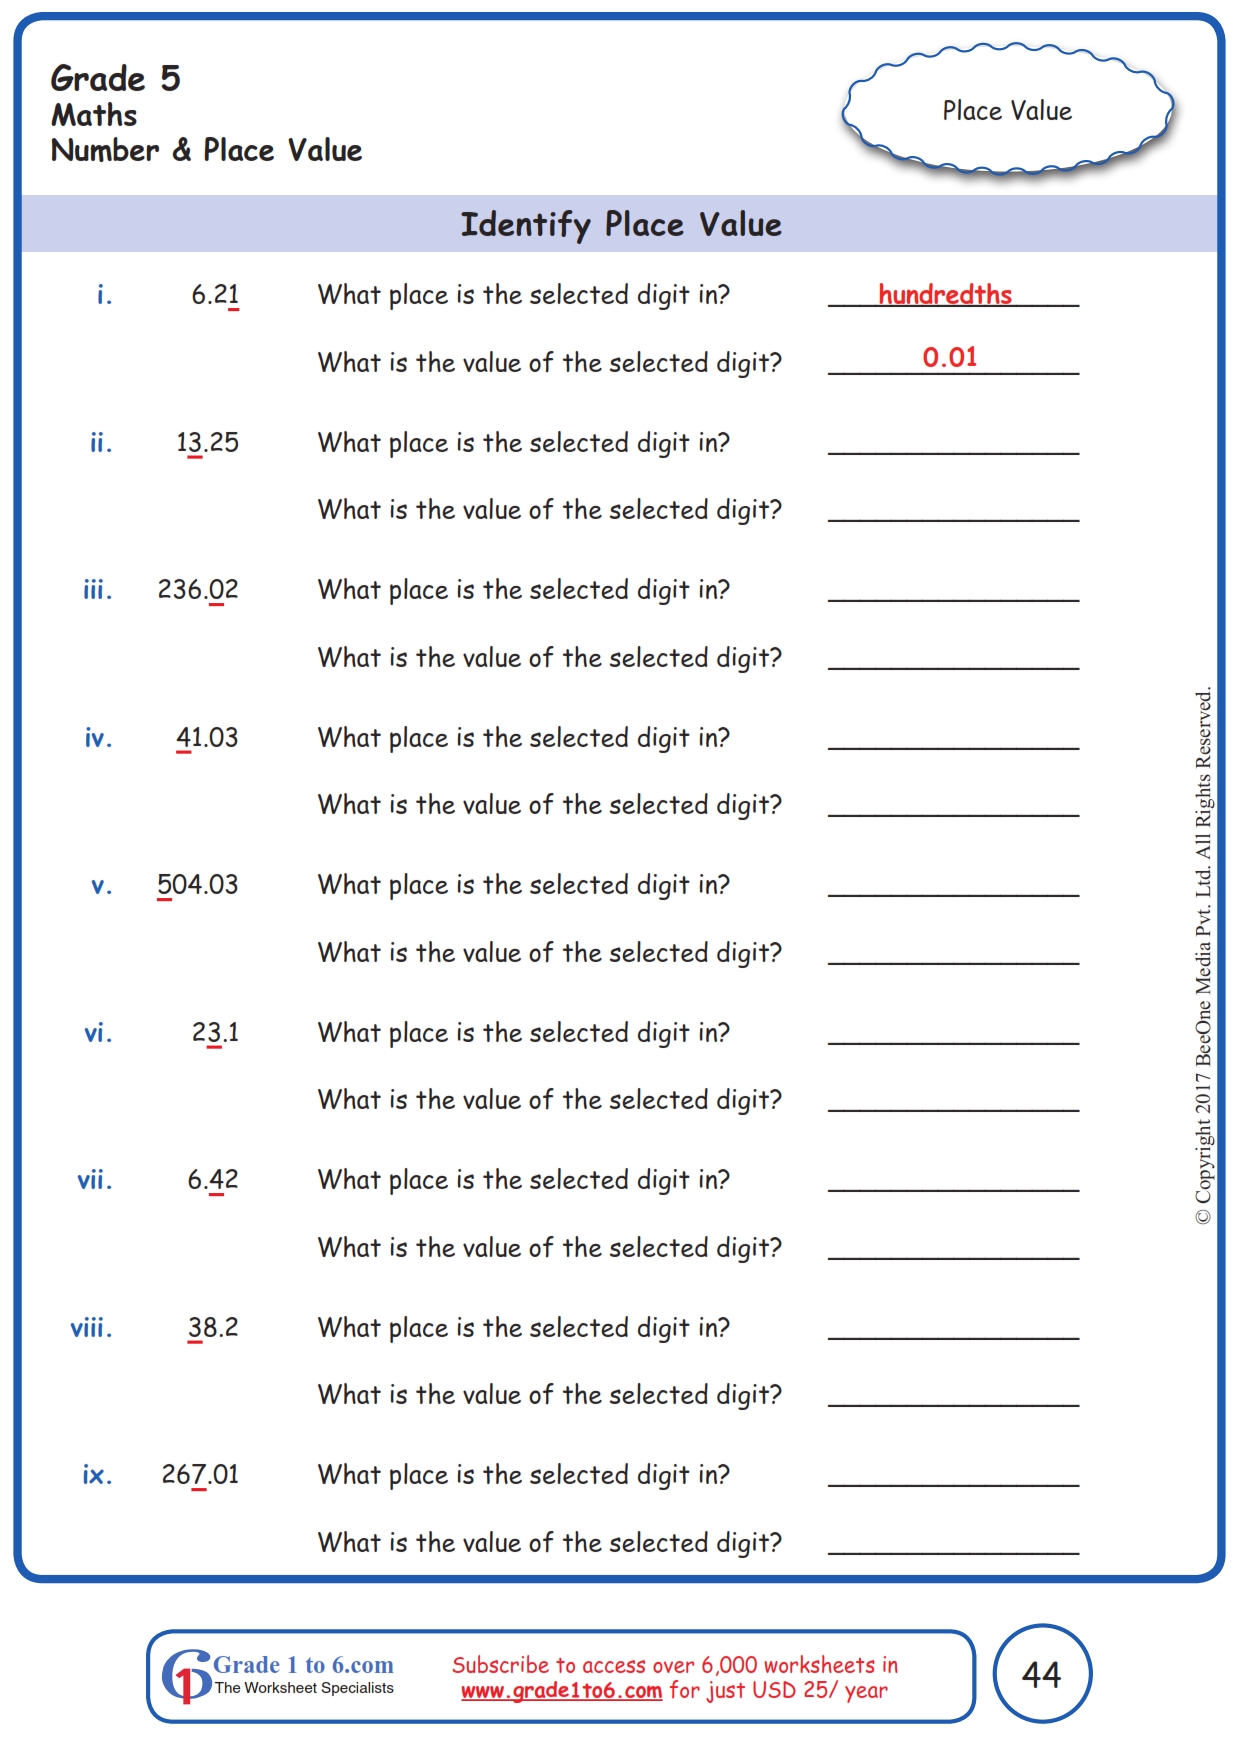 rounding-worksheets-grade-5-www-grade1to6